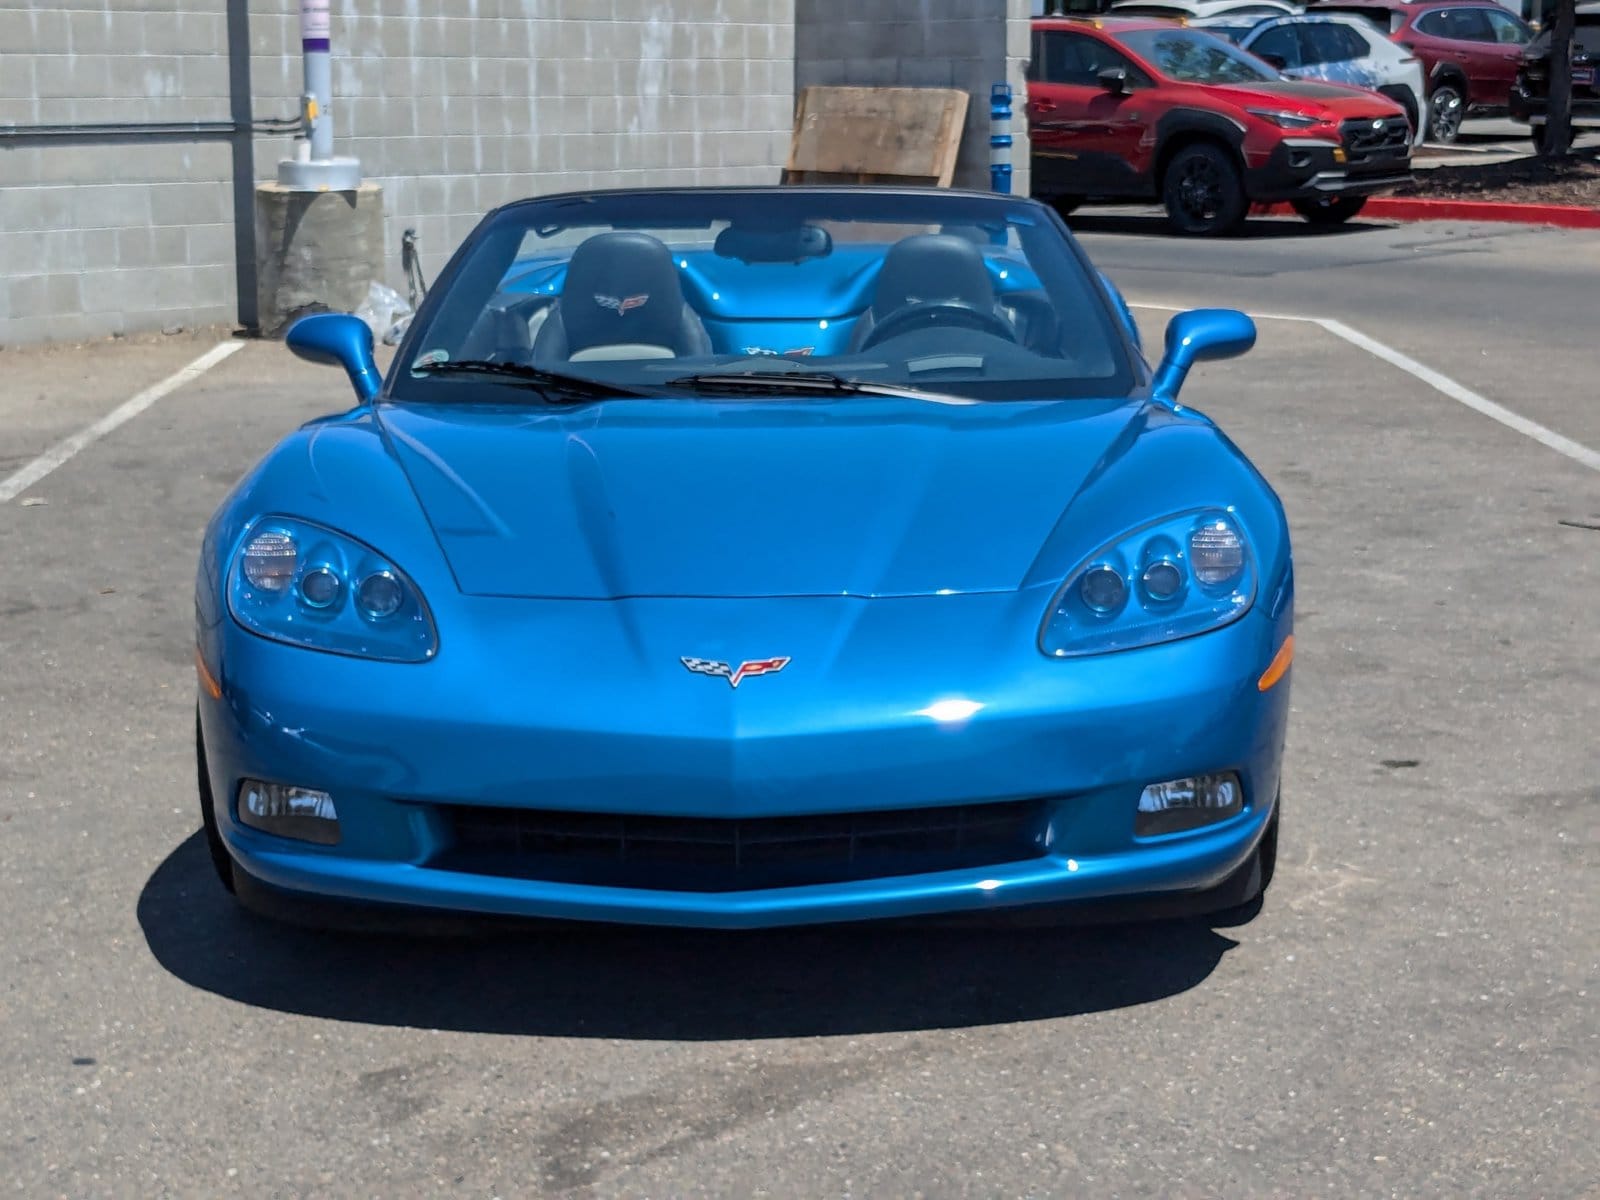 Used 2008 Chevrolet Corvette Base with VIN 1G1YY36WX85104396 for sale in Roseville, CA